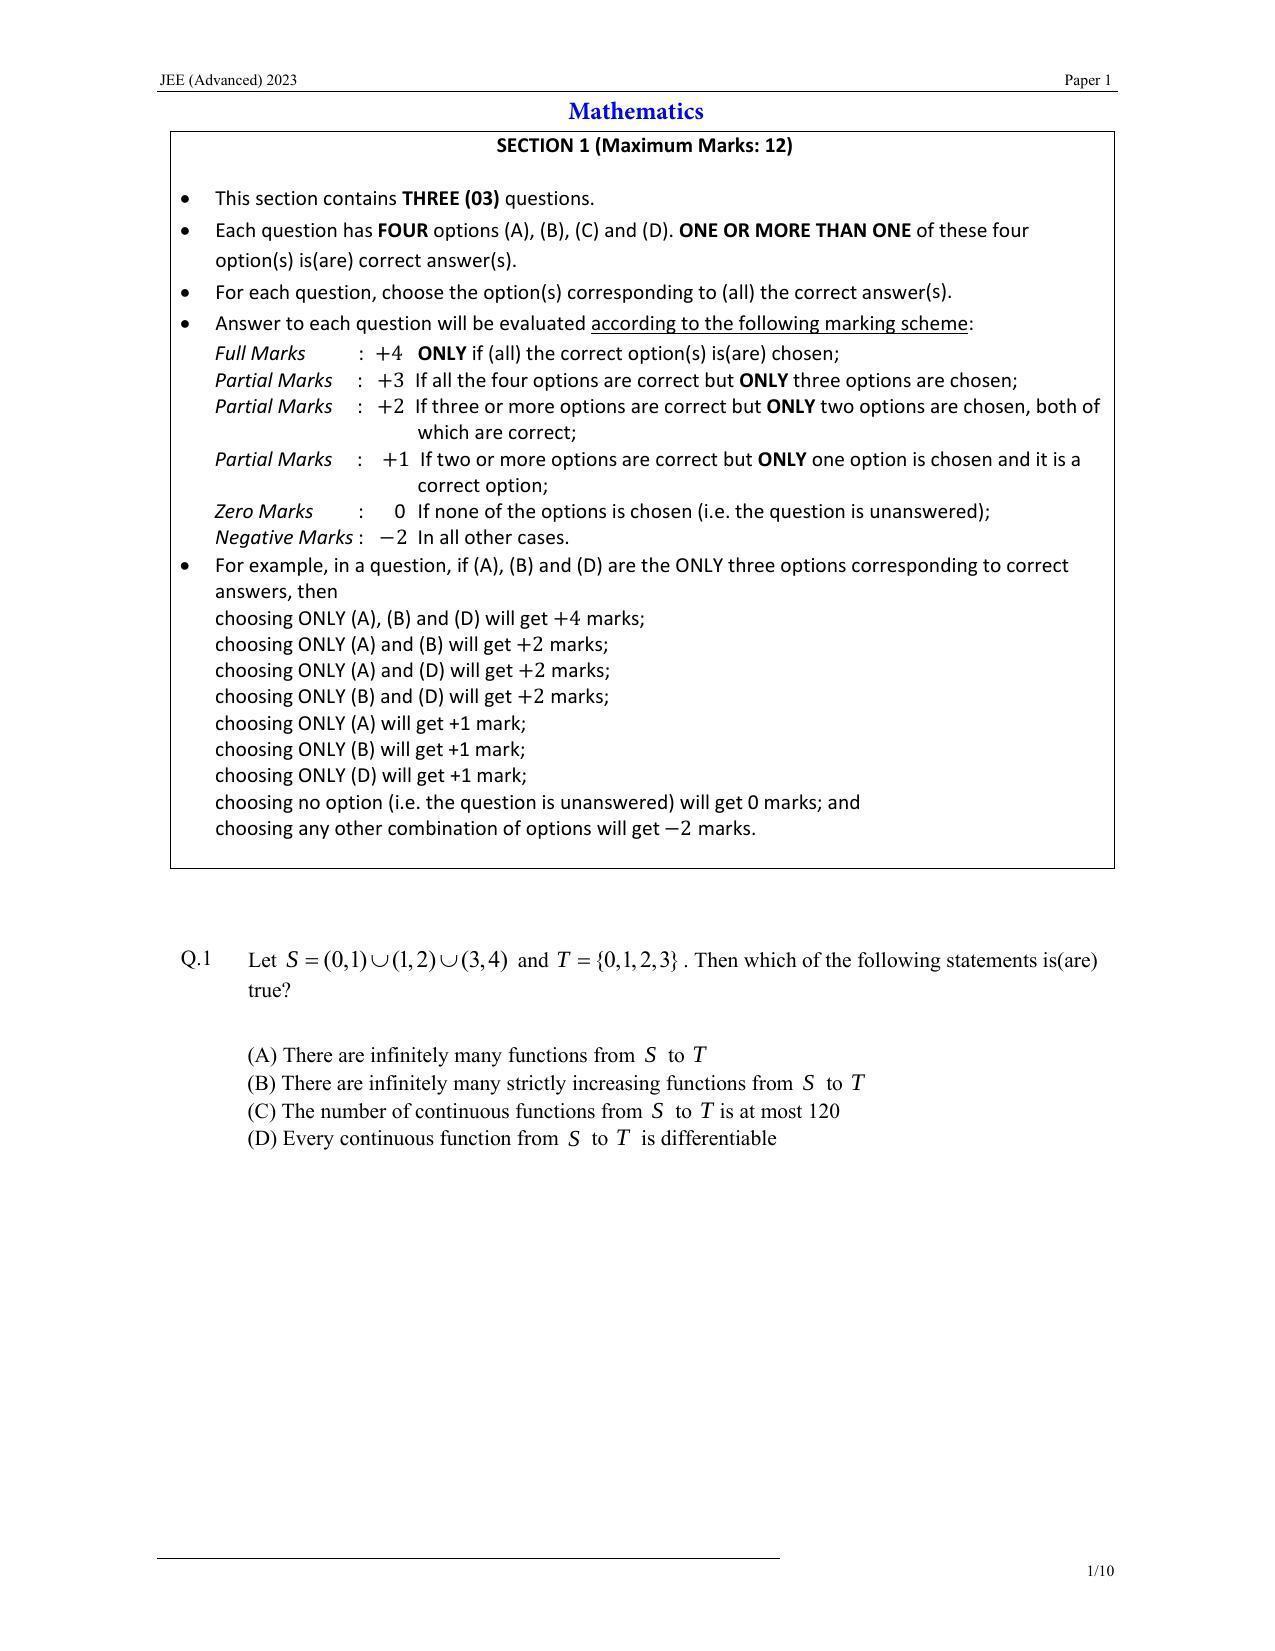 JEE (Advanced) 2023 Paper I - Mathematics Question Paper - Page 1